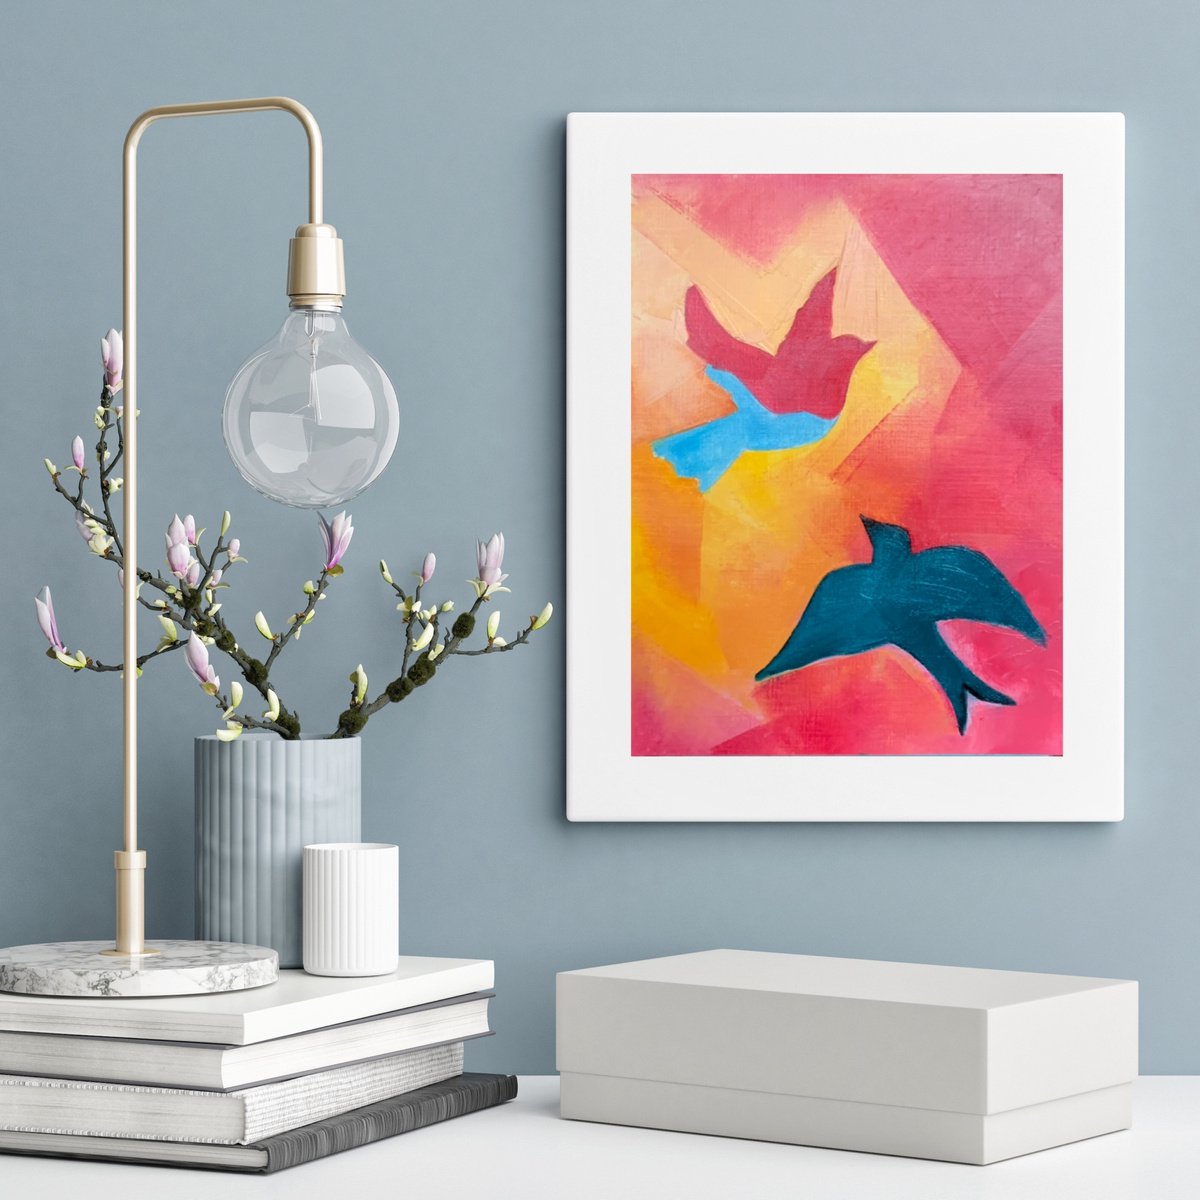 Abstract birds flying by Olha Gitman